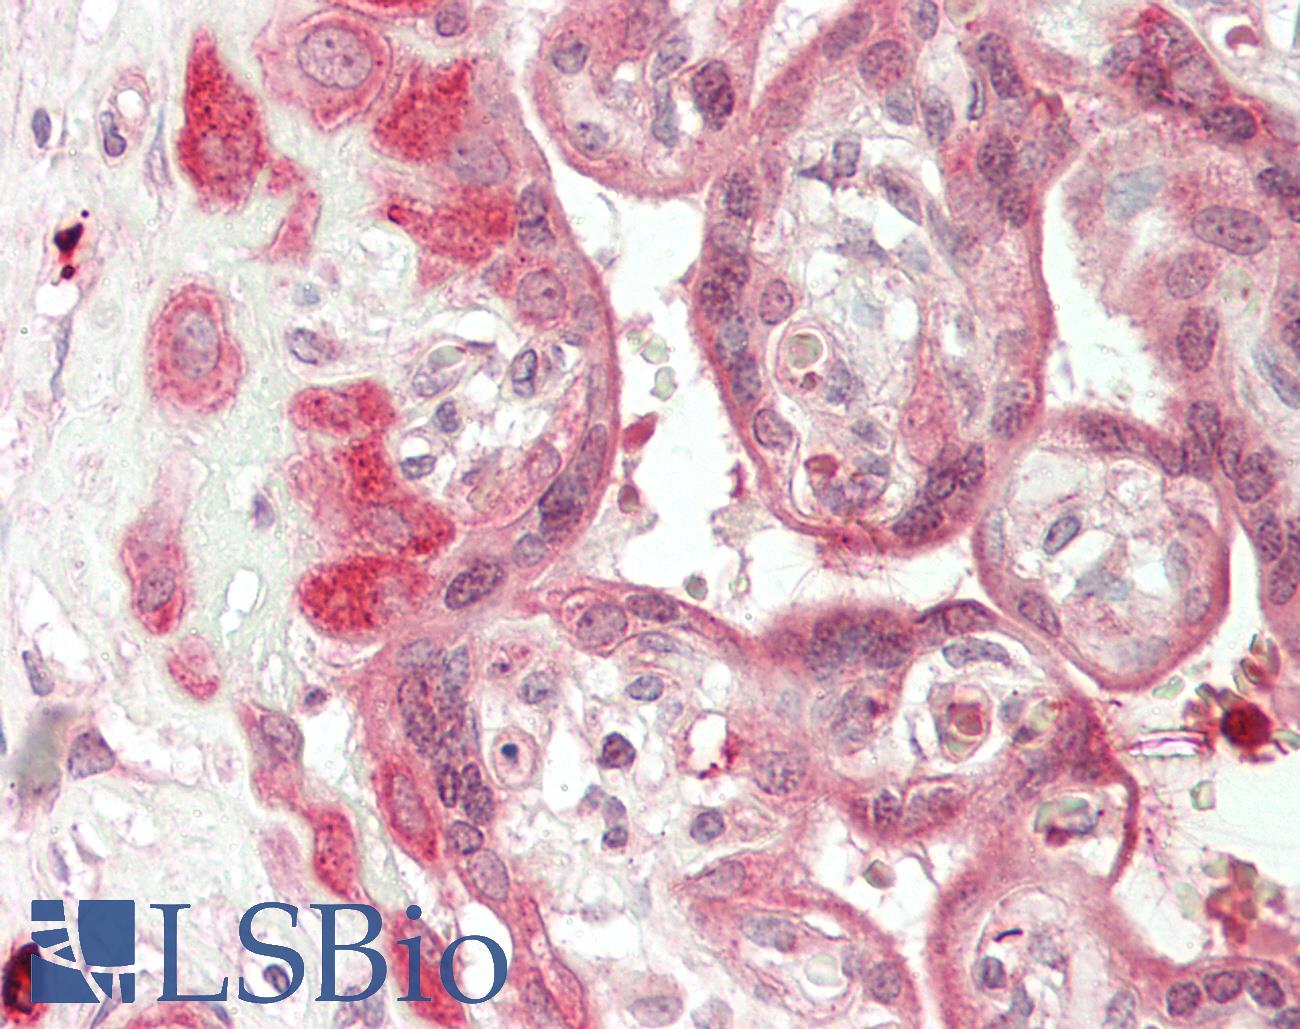 METTL13 / KIAA0859 Antibody - Human Placenta: Formalin-Fixed, Paraffin-Embedded (FFPE)